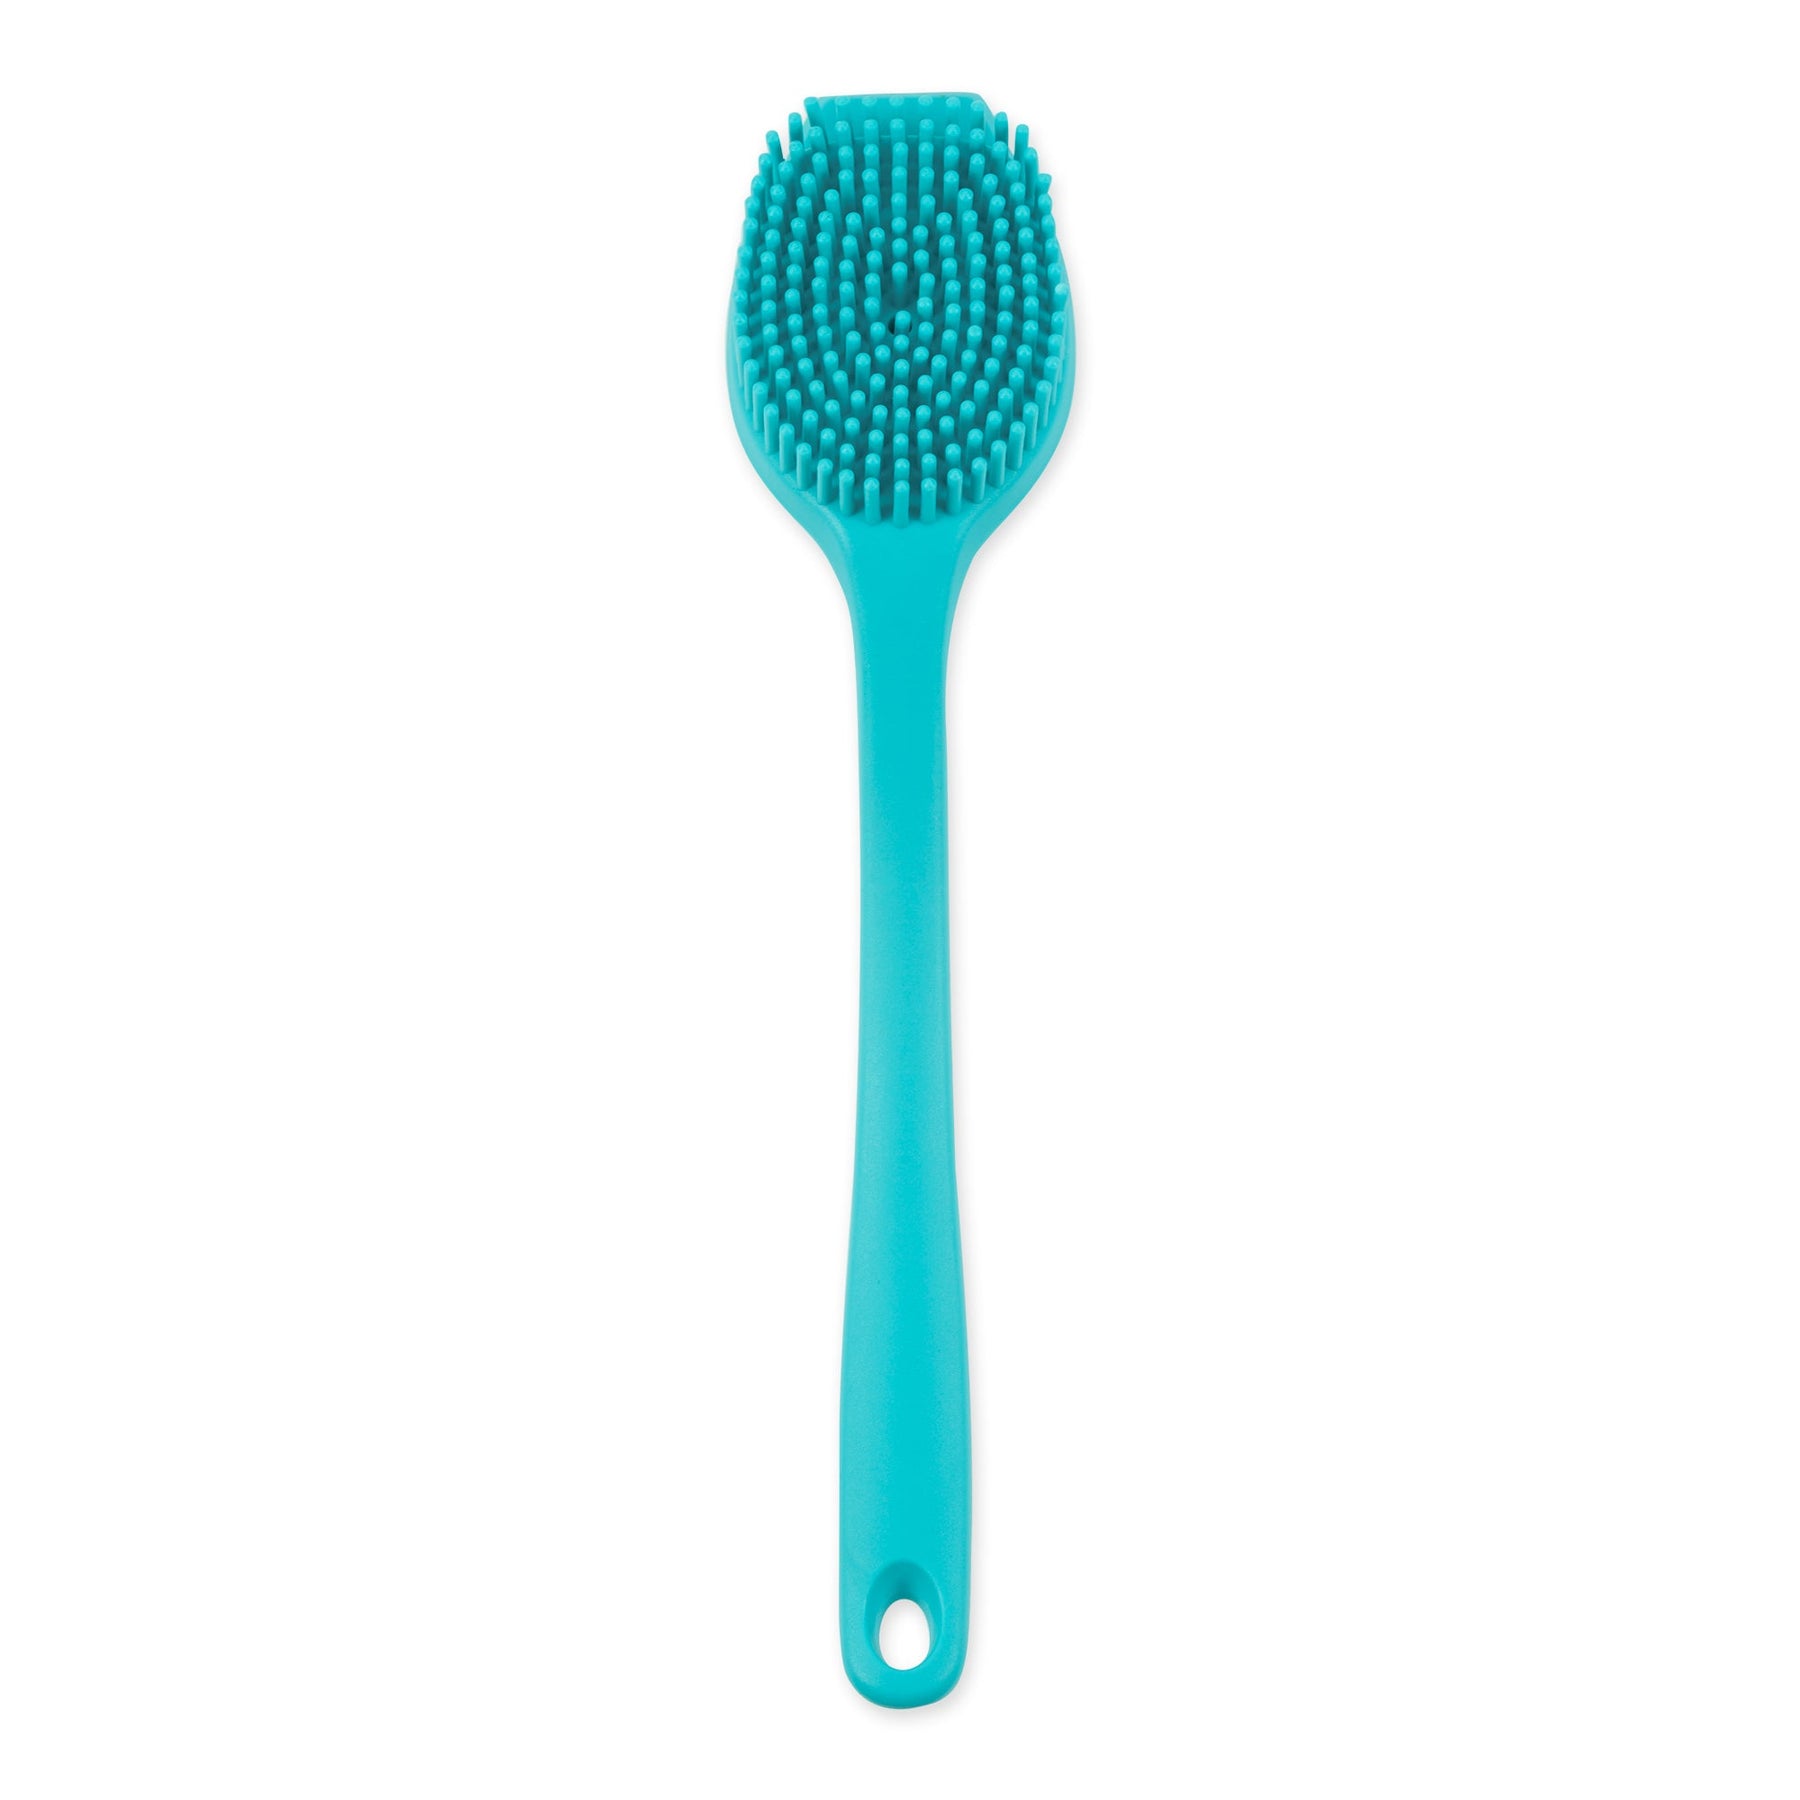 Rsvp Silicone Dish Brush ,Turquoise